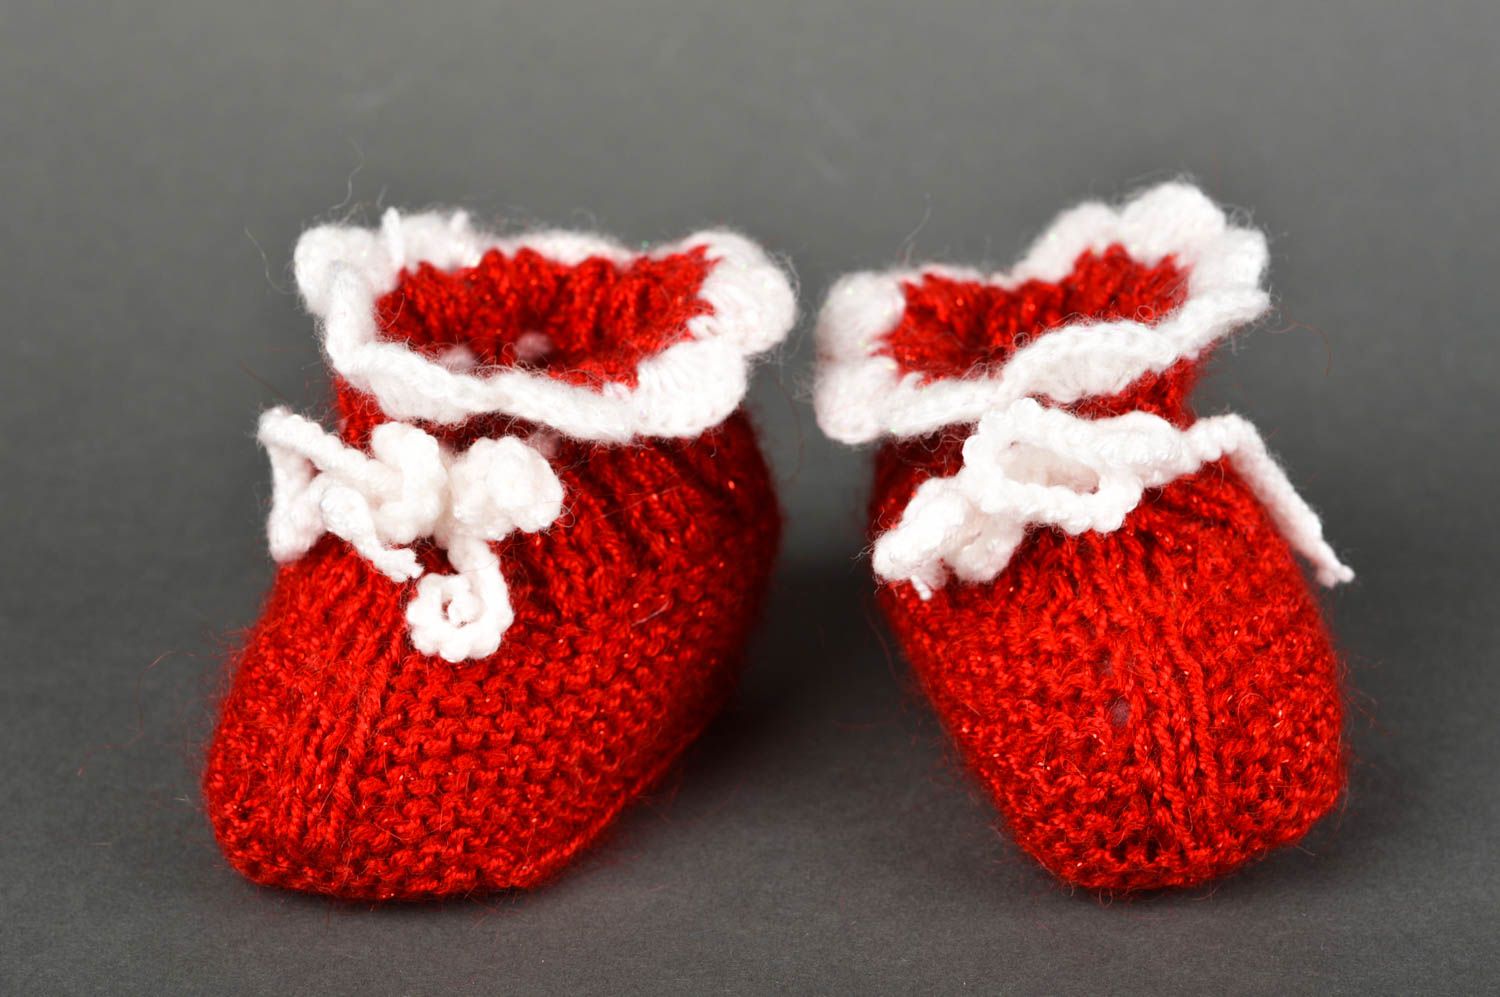 Cute handmade baby booties crochet ideas fashion baby accessories warm socks photo 2